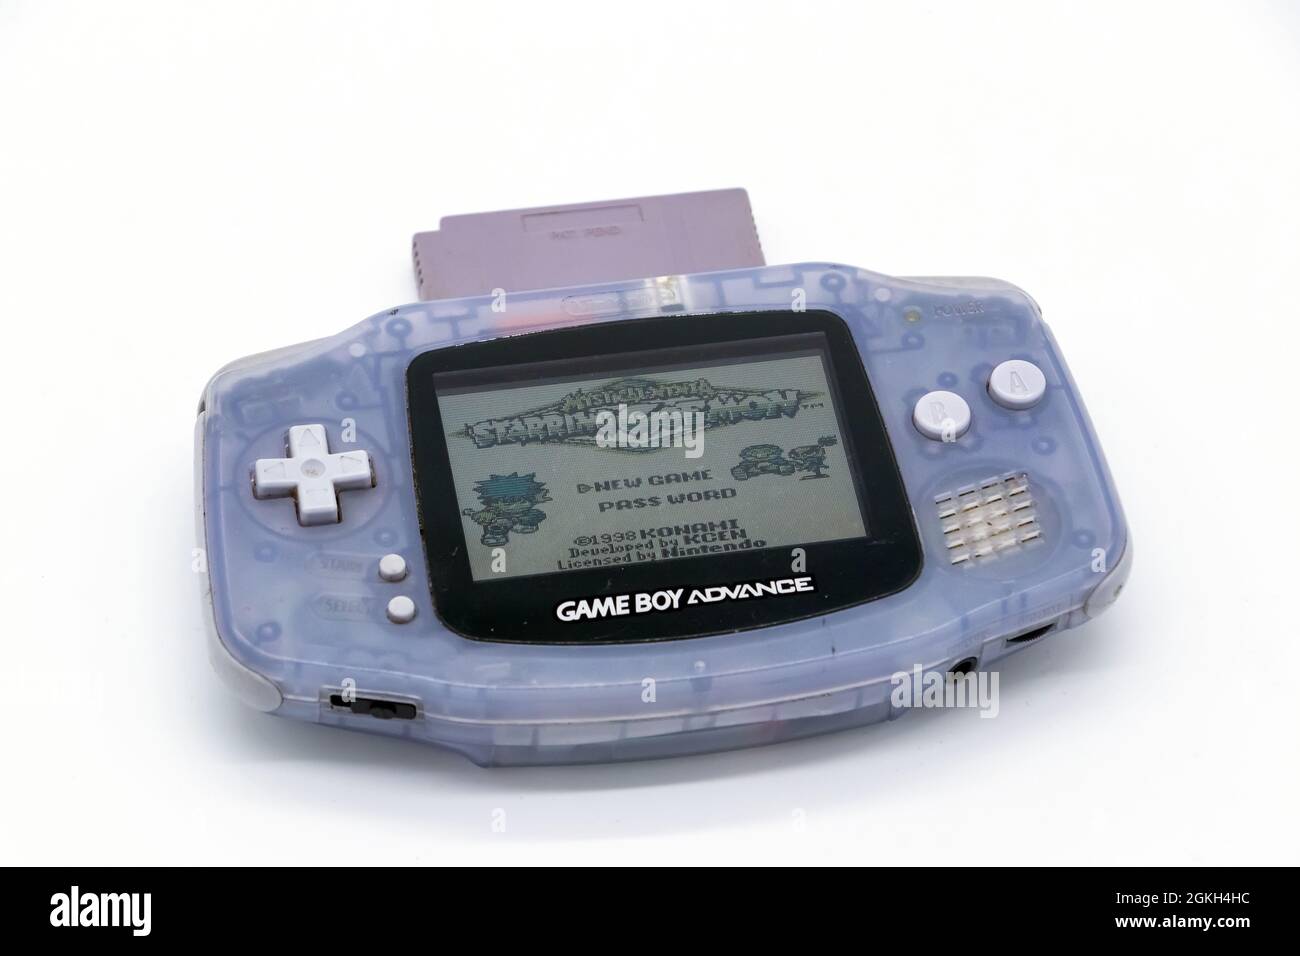 Nintendo game boy advance handheld device and game cartridge Stock Photo -  Alamy